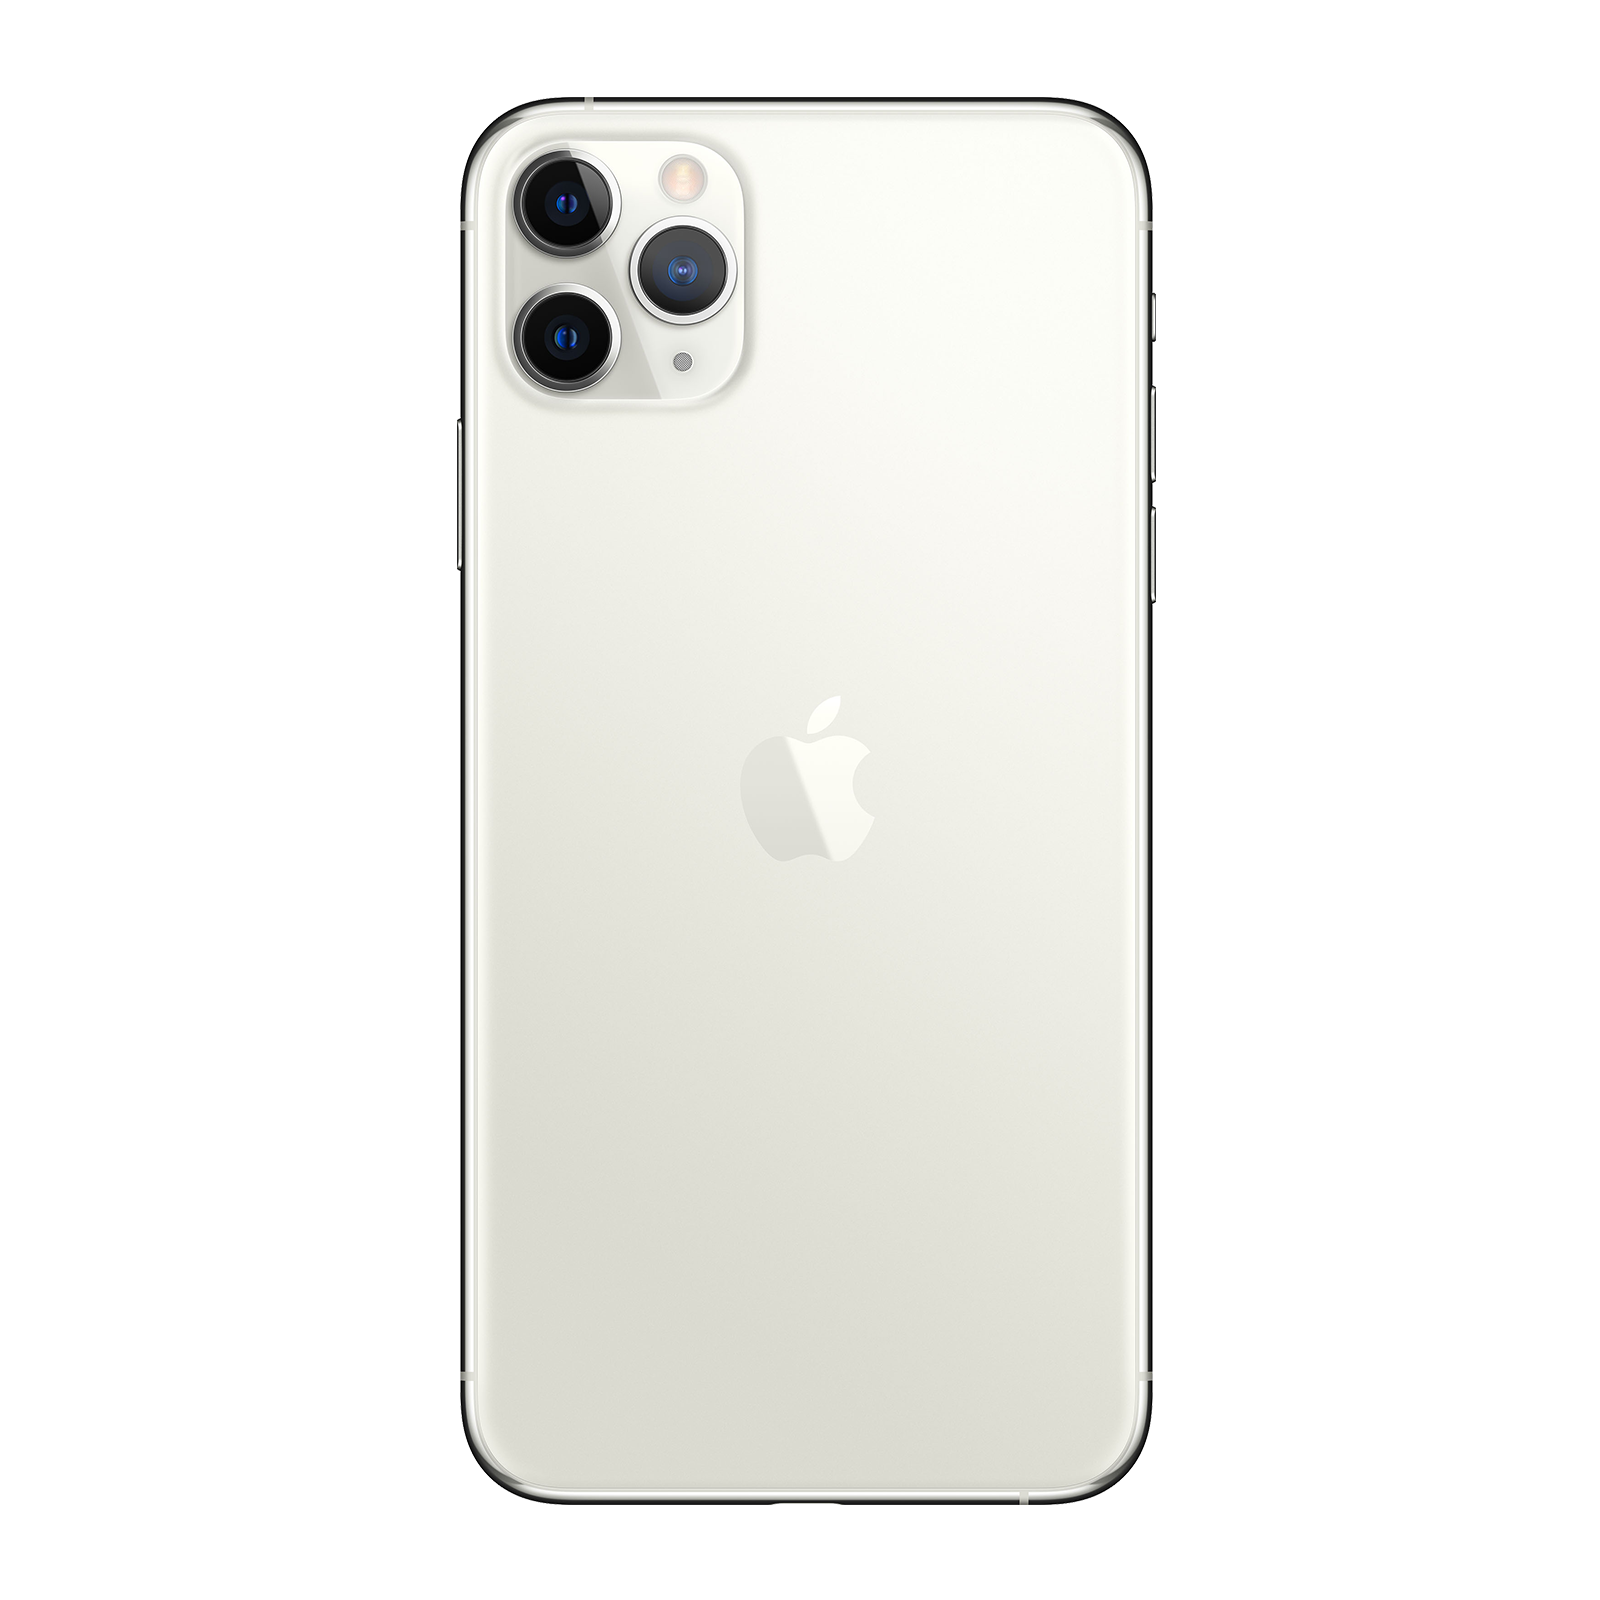 iPhone 11 Pro 256GB Silver Good Unlocked - New Battery